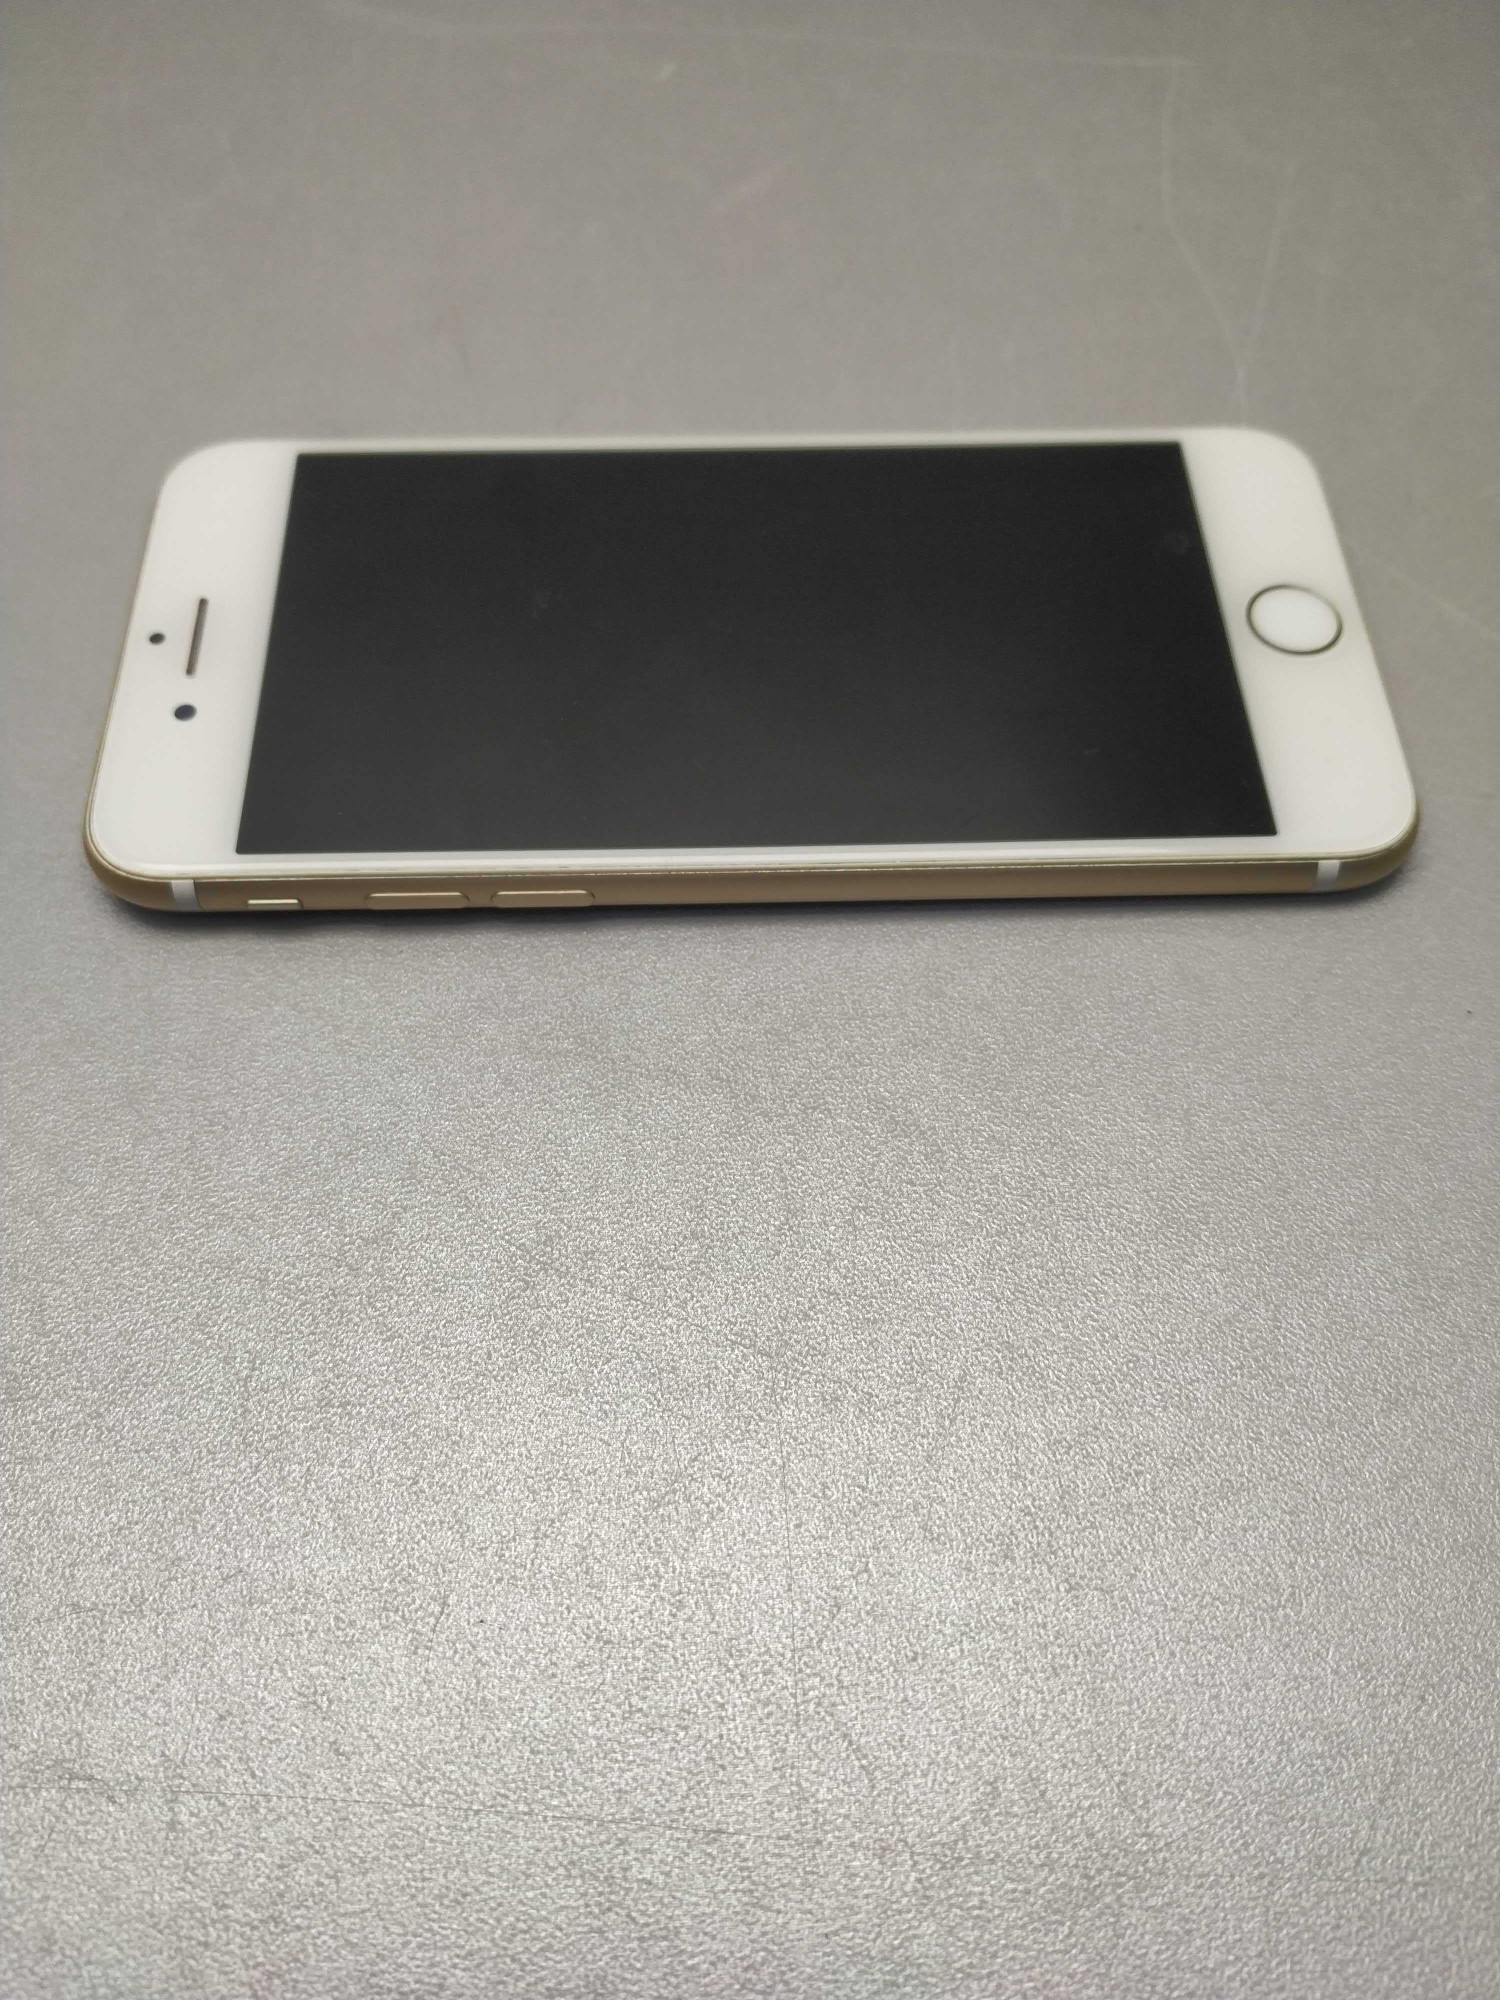 Apple iPhone 7 128Gb Gold (MN942) 4